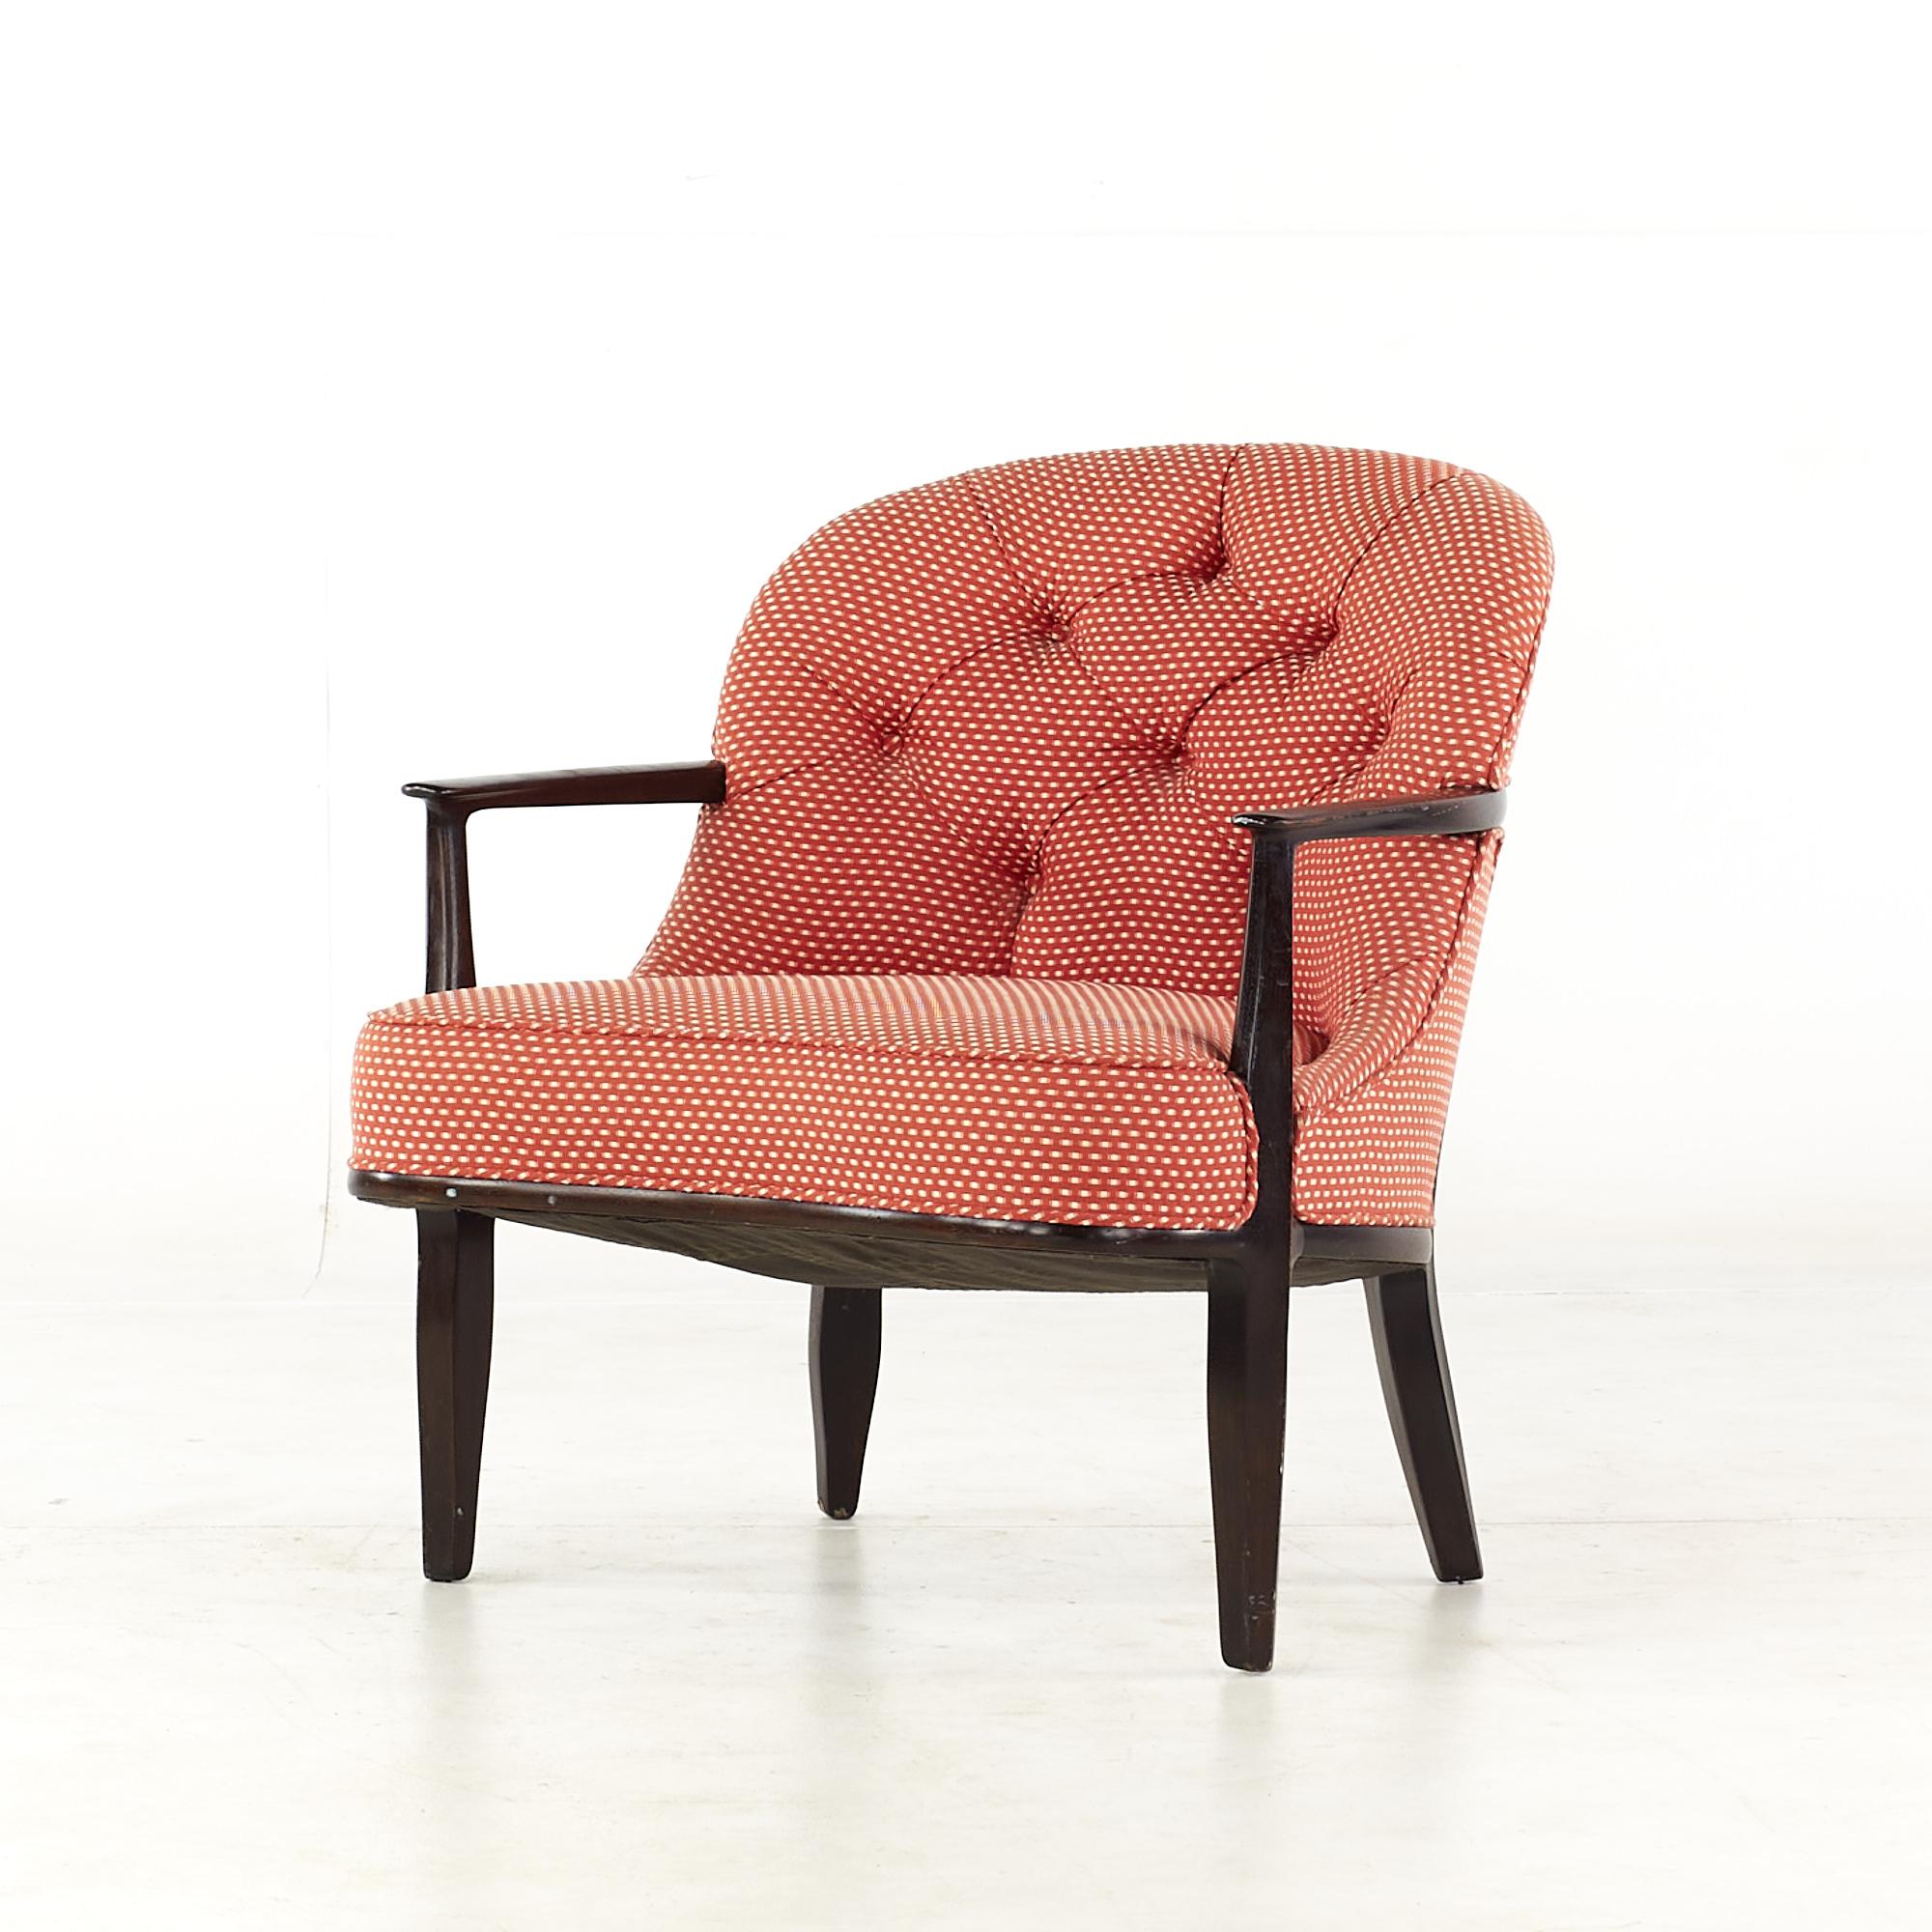 Late 20th Century Edward Wormley for Dunbar Janus Mid-Century Lounge Chairs, Pair